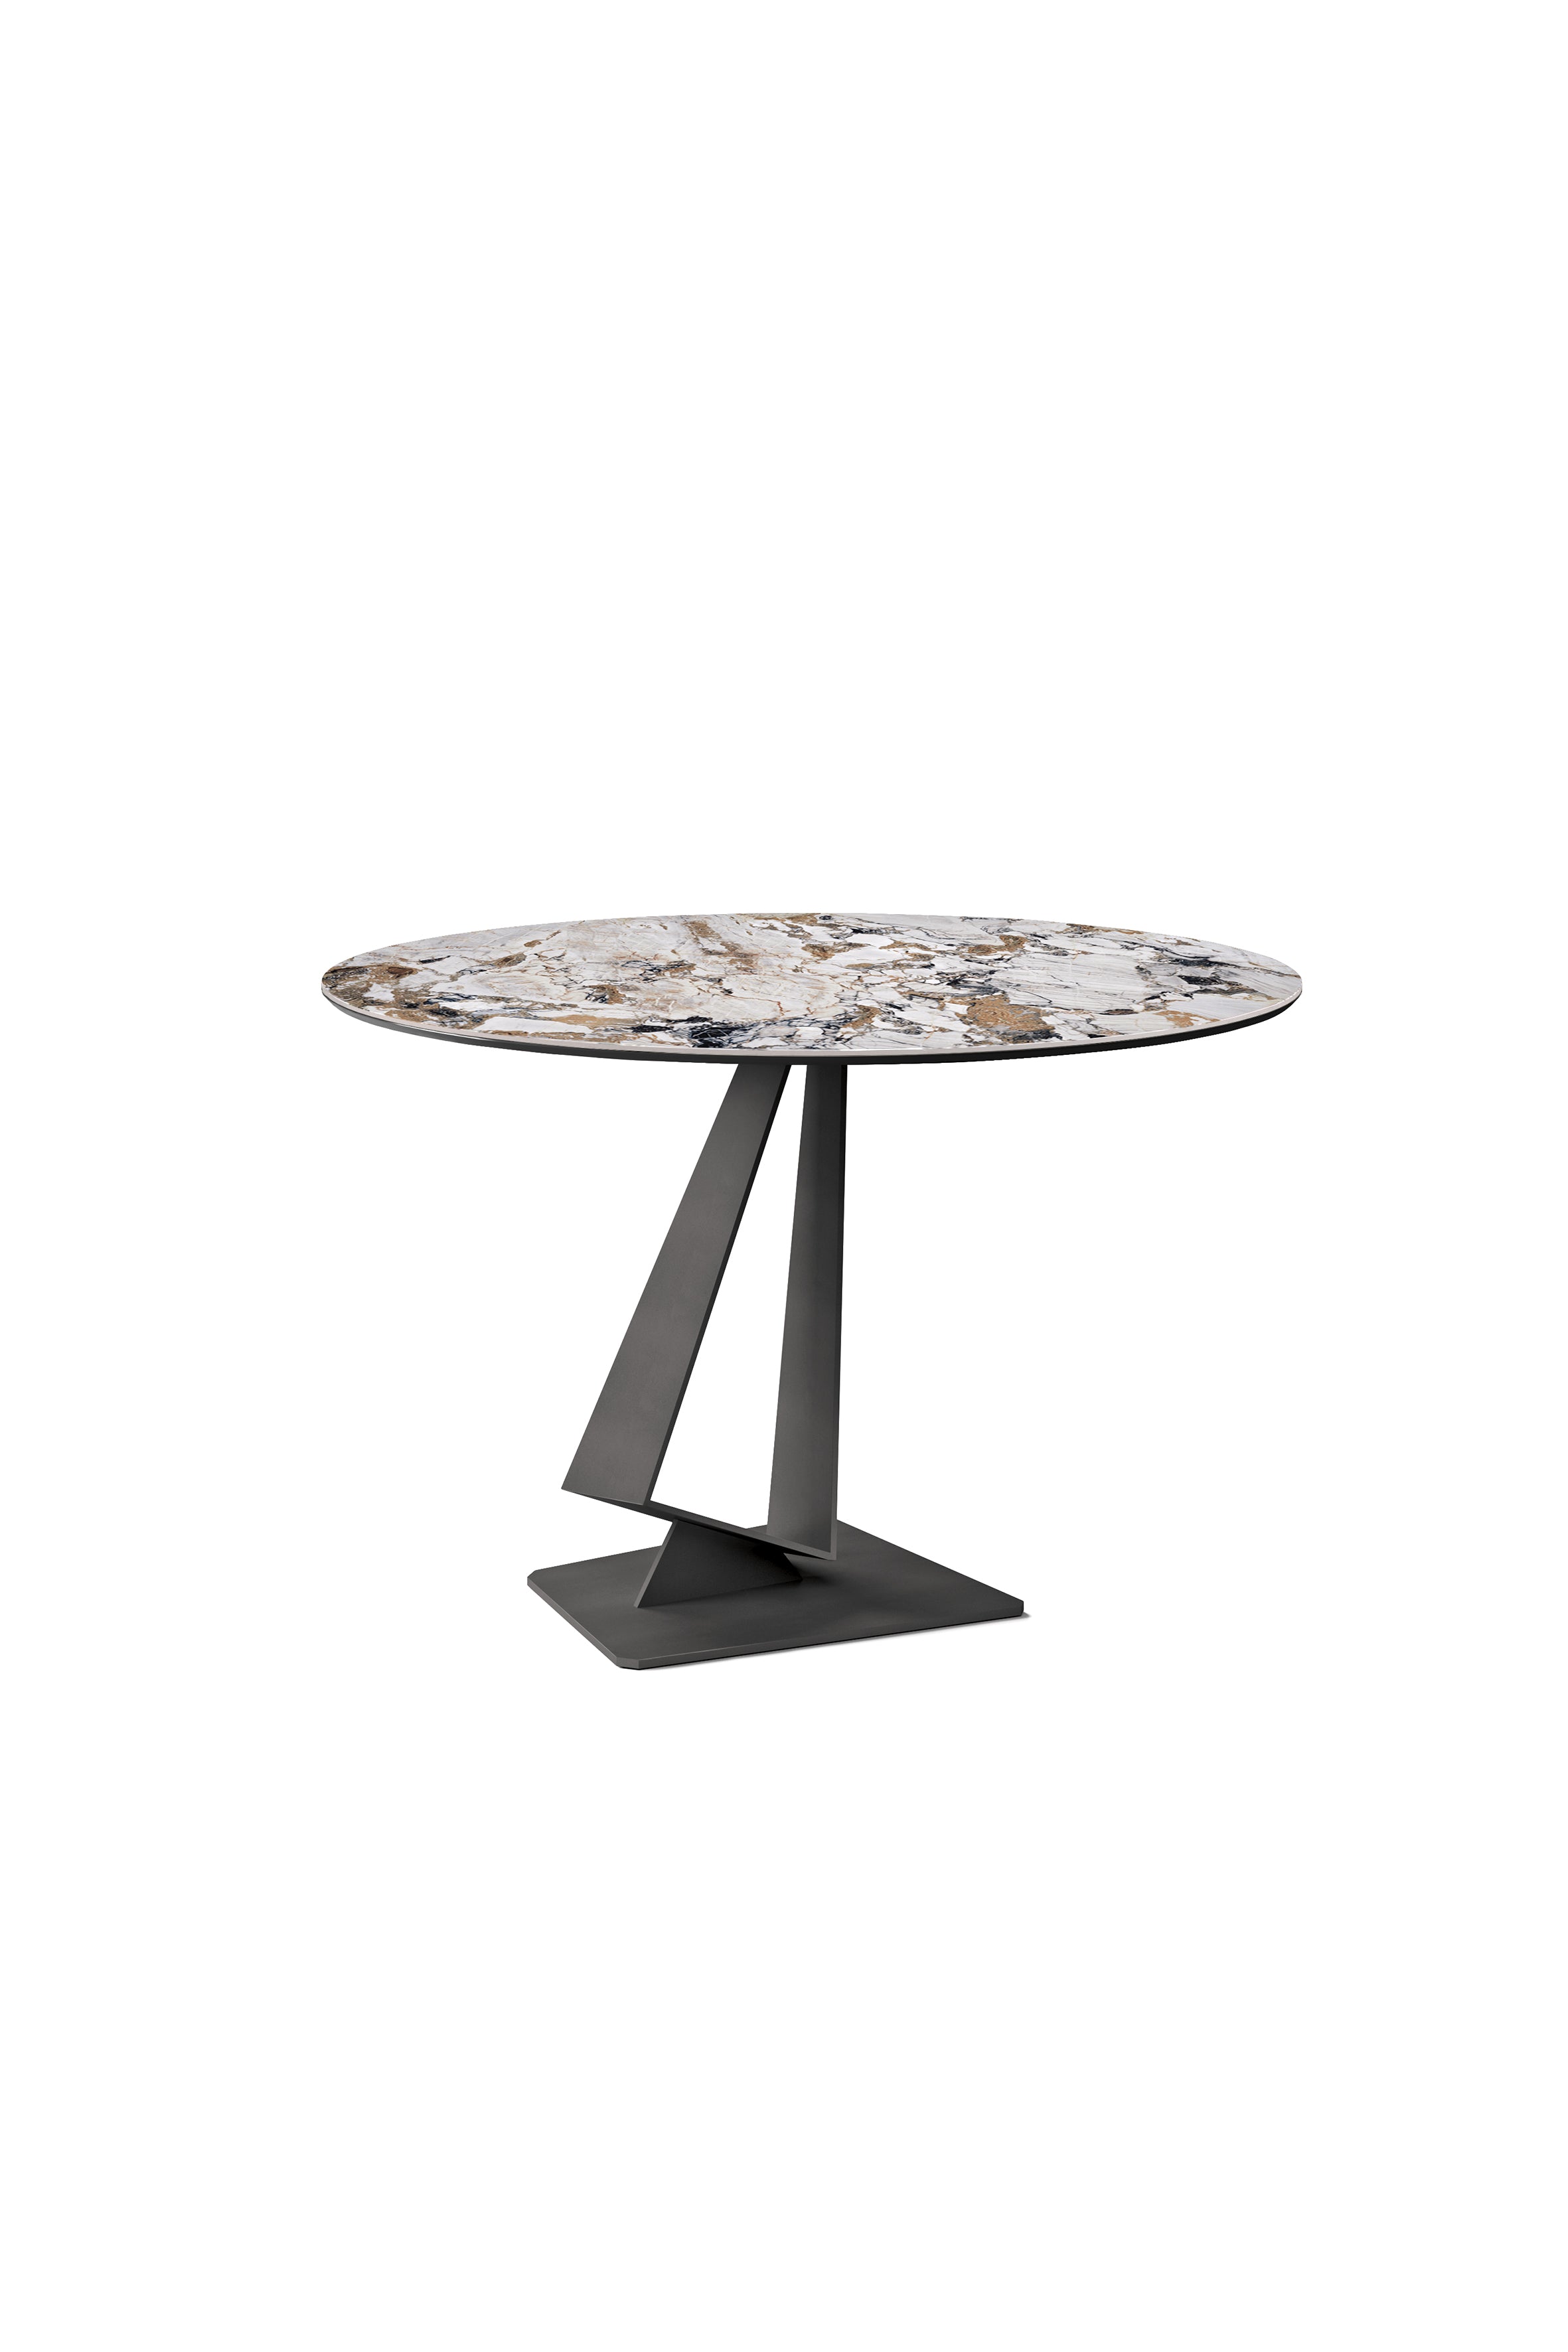 cattelan italia roger keramik Table With Steel Base